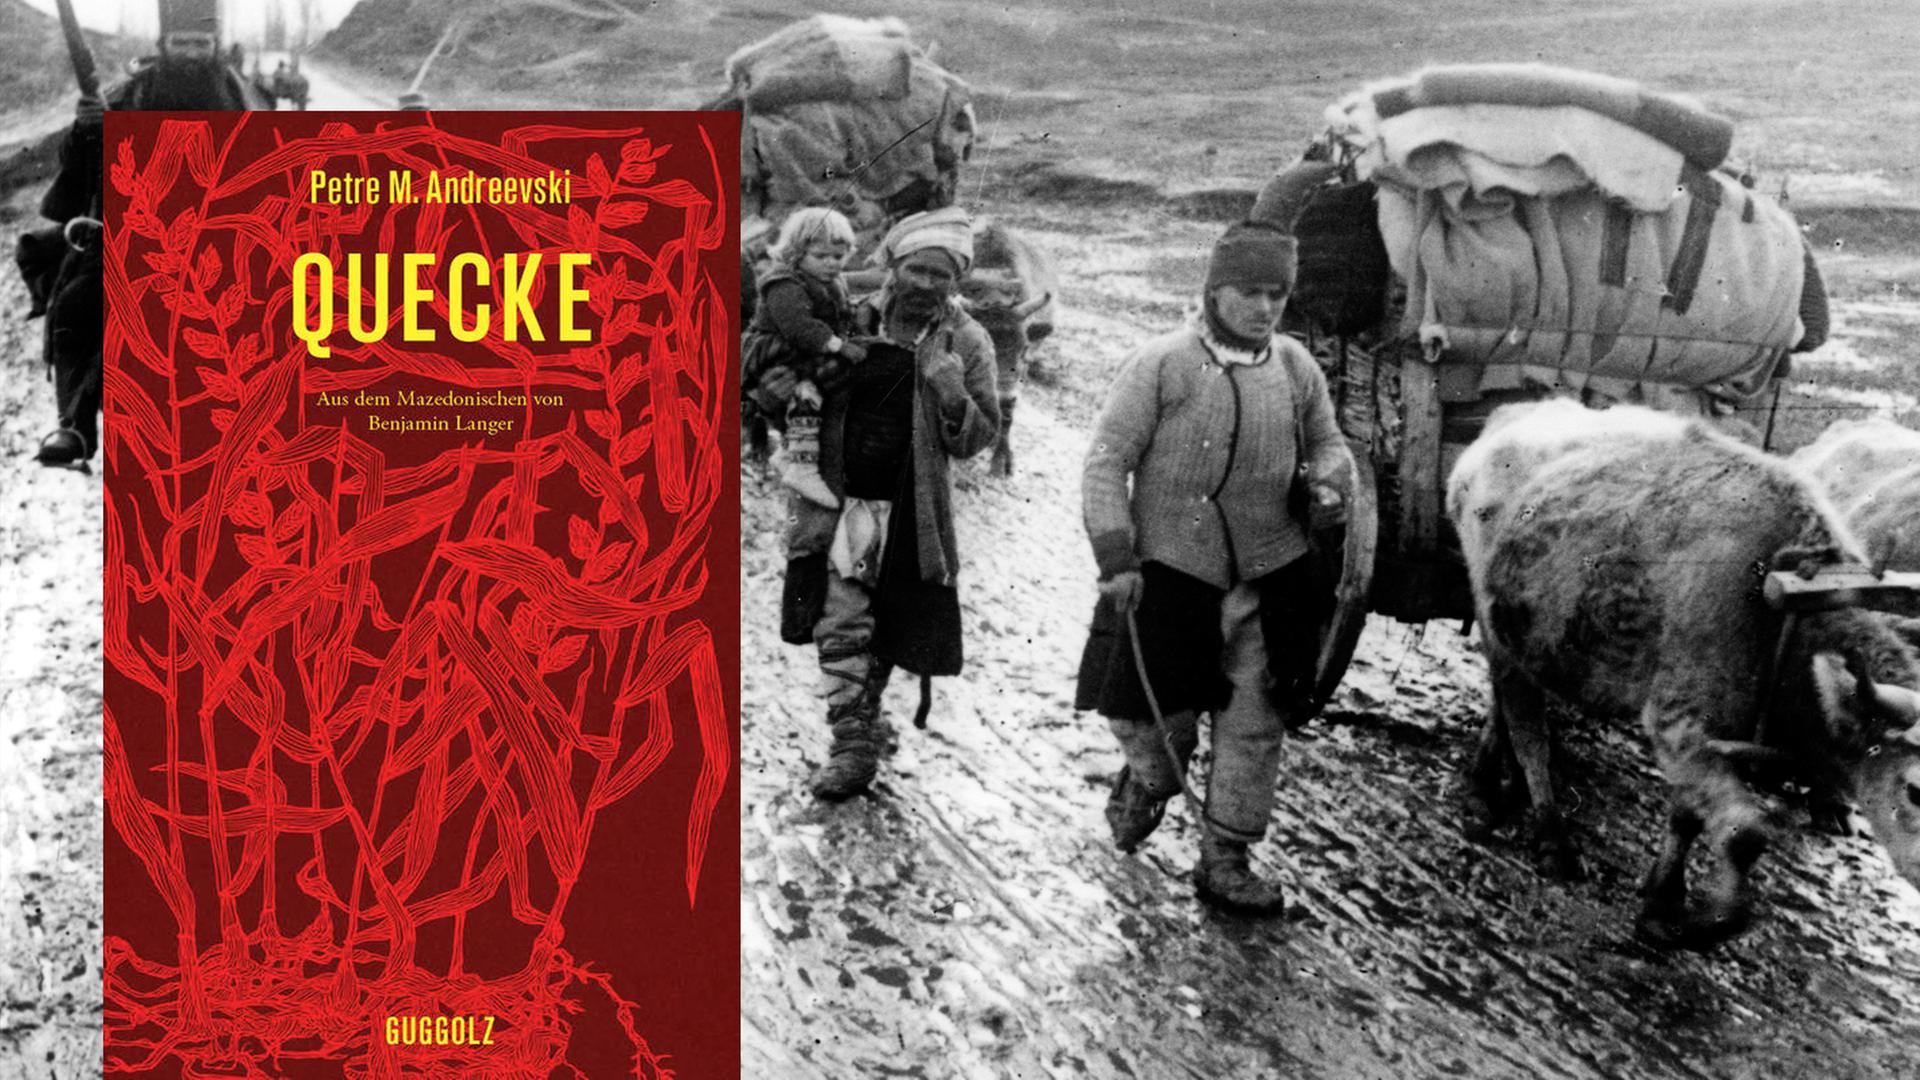 Buchcover Petre M. Andreevski: "Quecke"